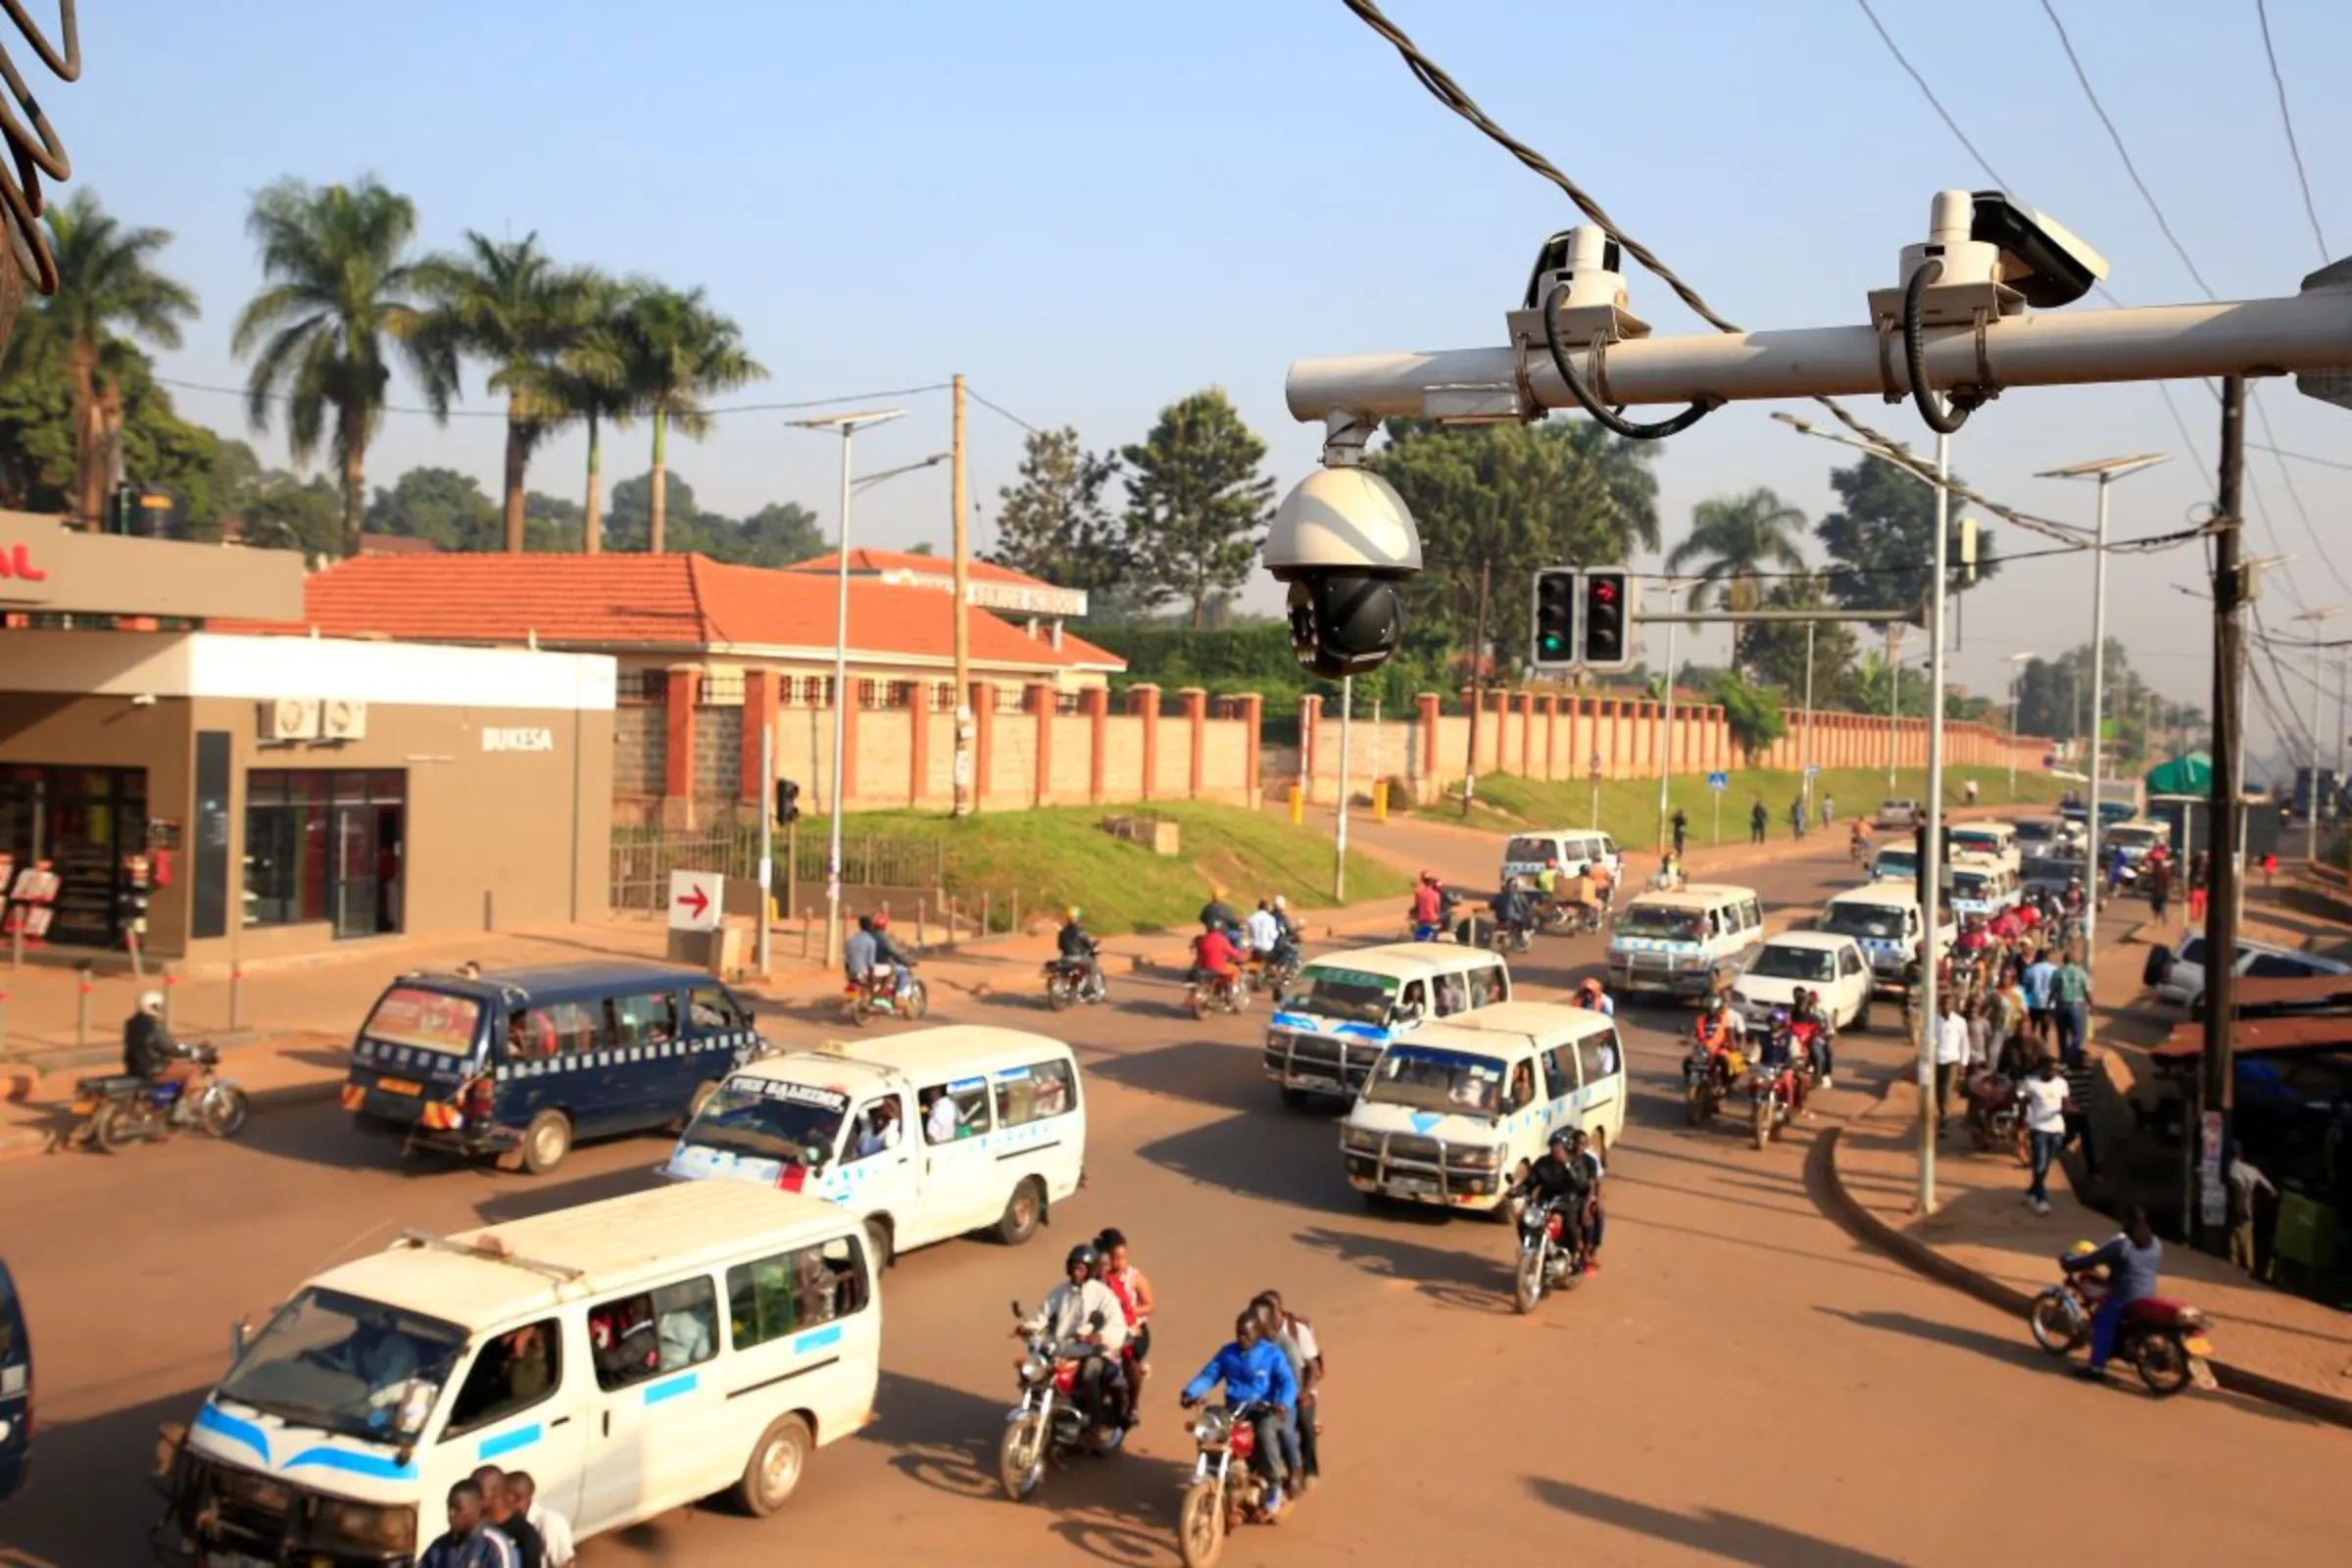 Traffic flows under the surveillance closed-circuit television camera (CCTV) system along Bakuli street in Kampala, Uganda August 14, 2019